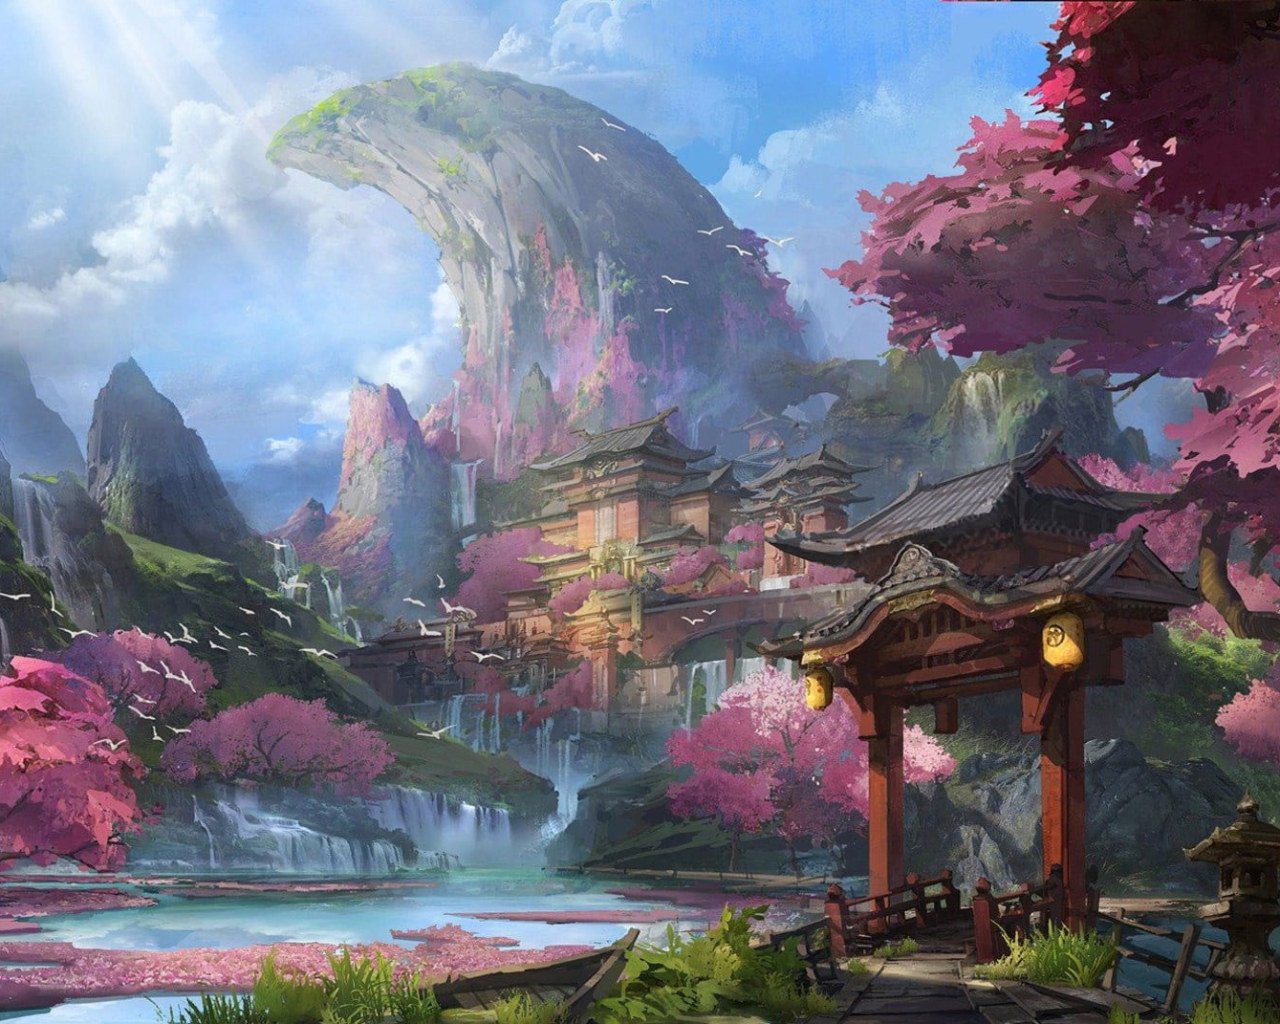 Artwork wallpaper, fantasy art, Chinese architecture, mountains, cherry blossom • Wallpaper For You HD Wallpaper For Desktop & Mobile